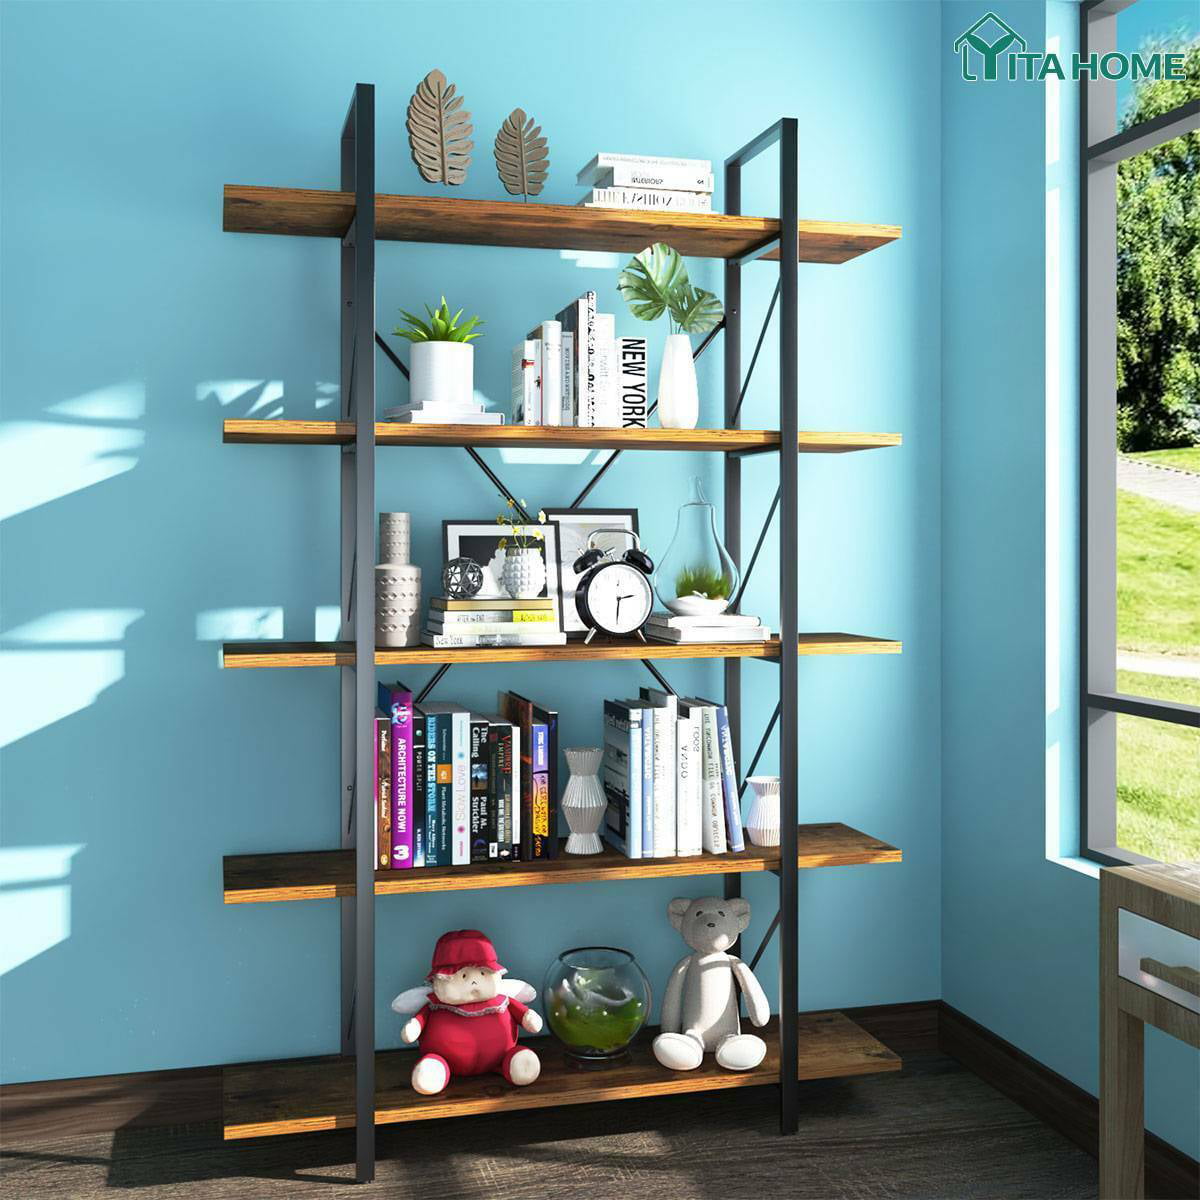 Details about   YITAHOME 5-Tier Bookshelf Storage Rack Display Shelves Organizer Industrial Wood 